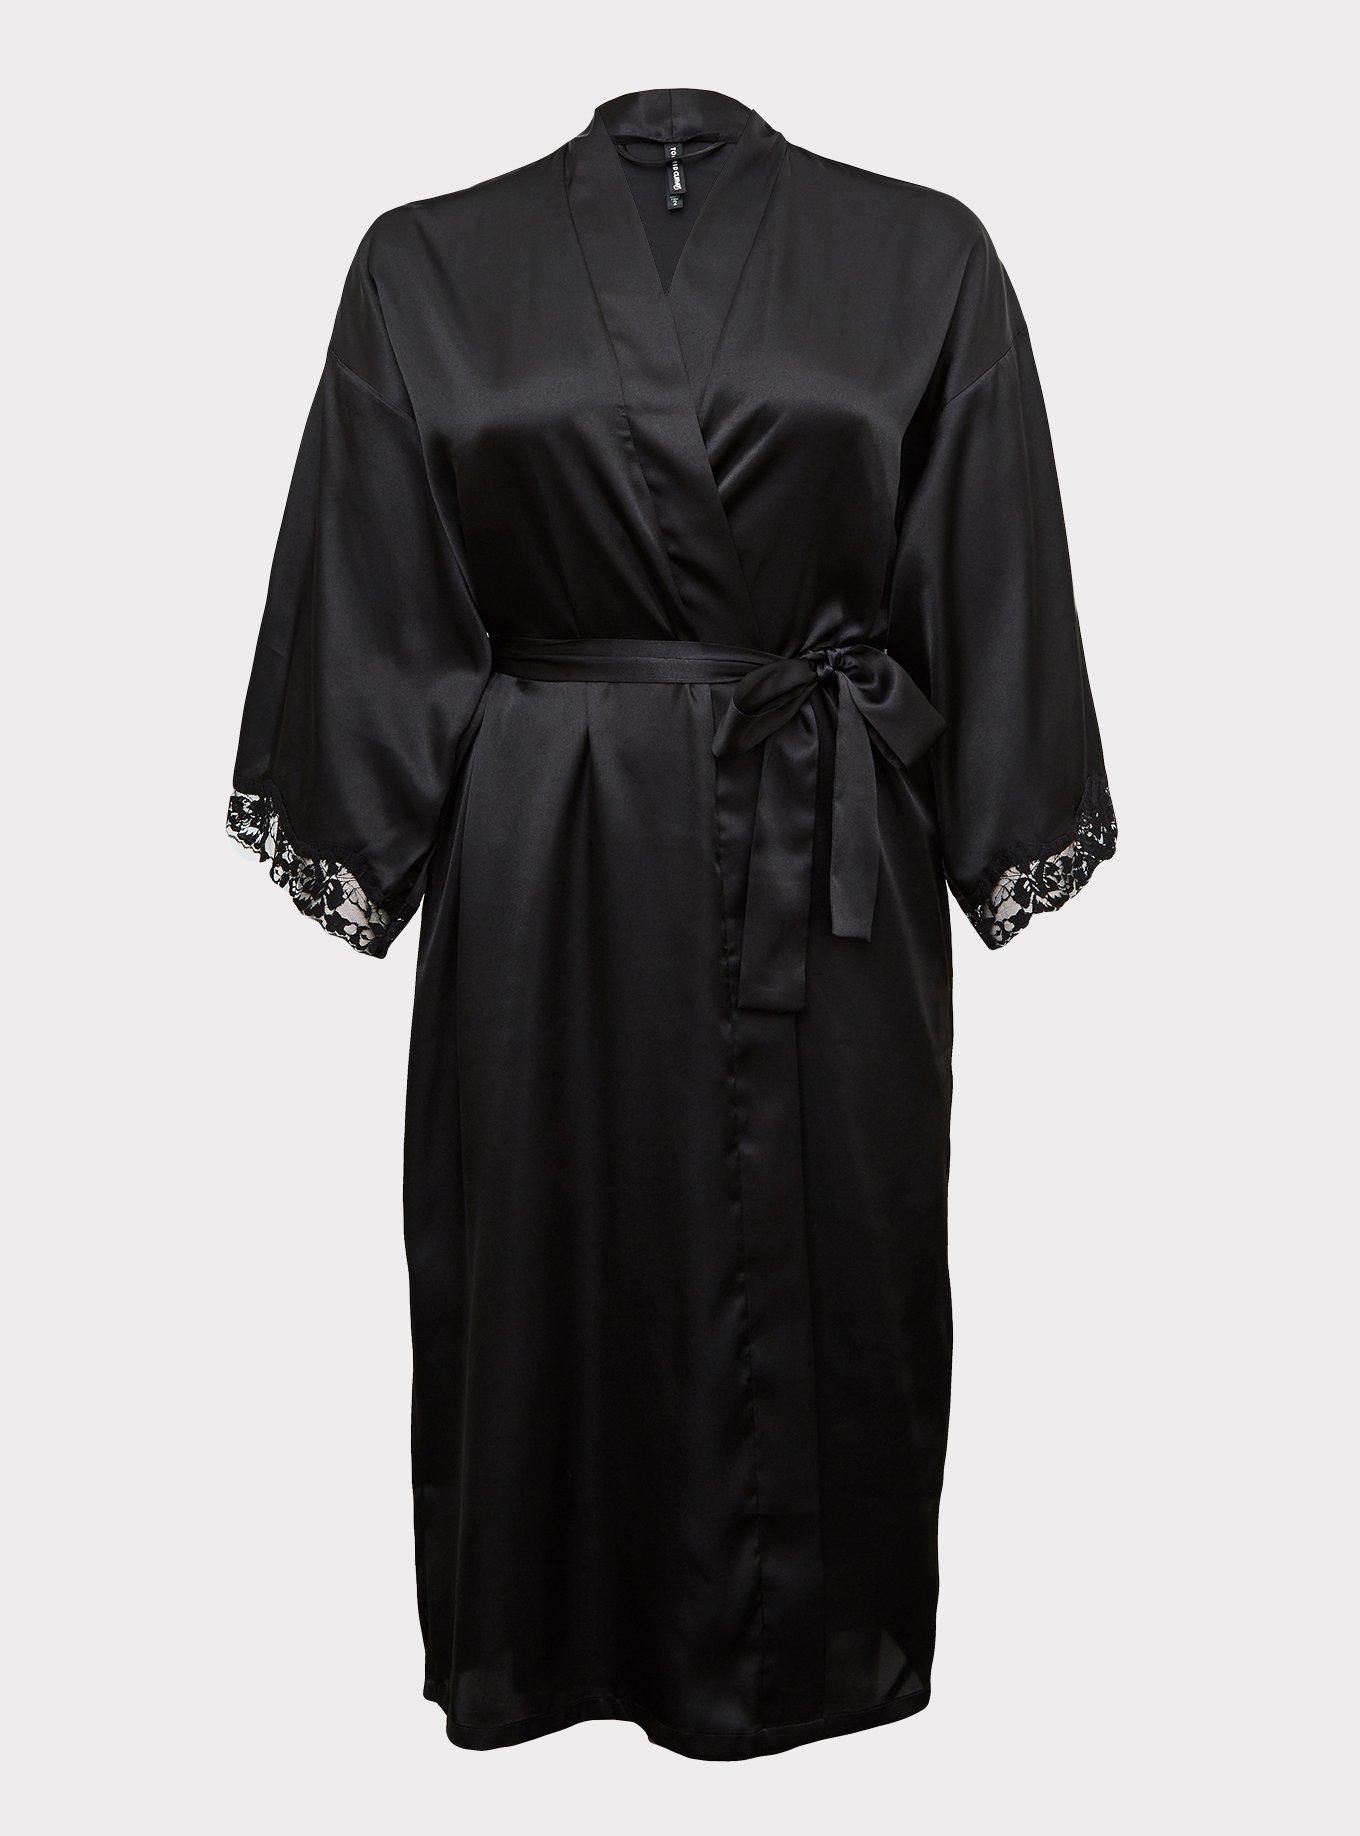 Plus Size - Black Satin & Lace Trim Self Tie Long Robe - Torrid